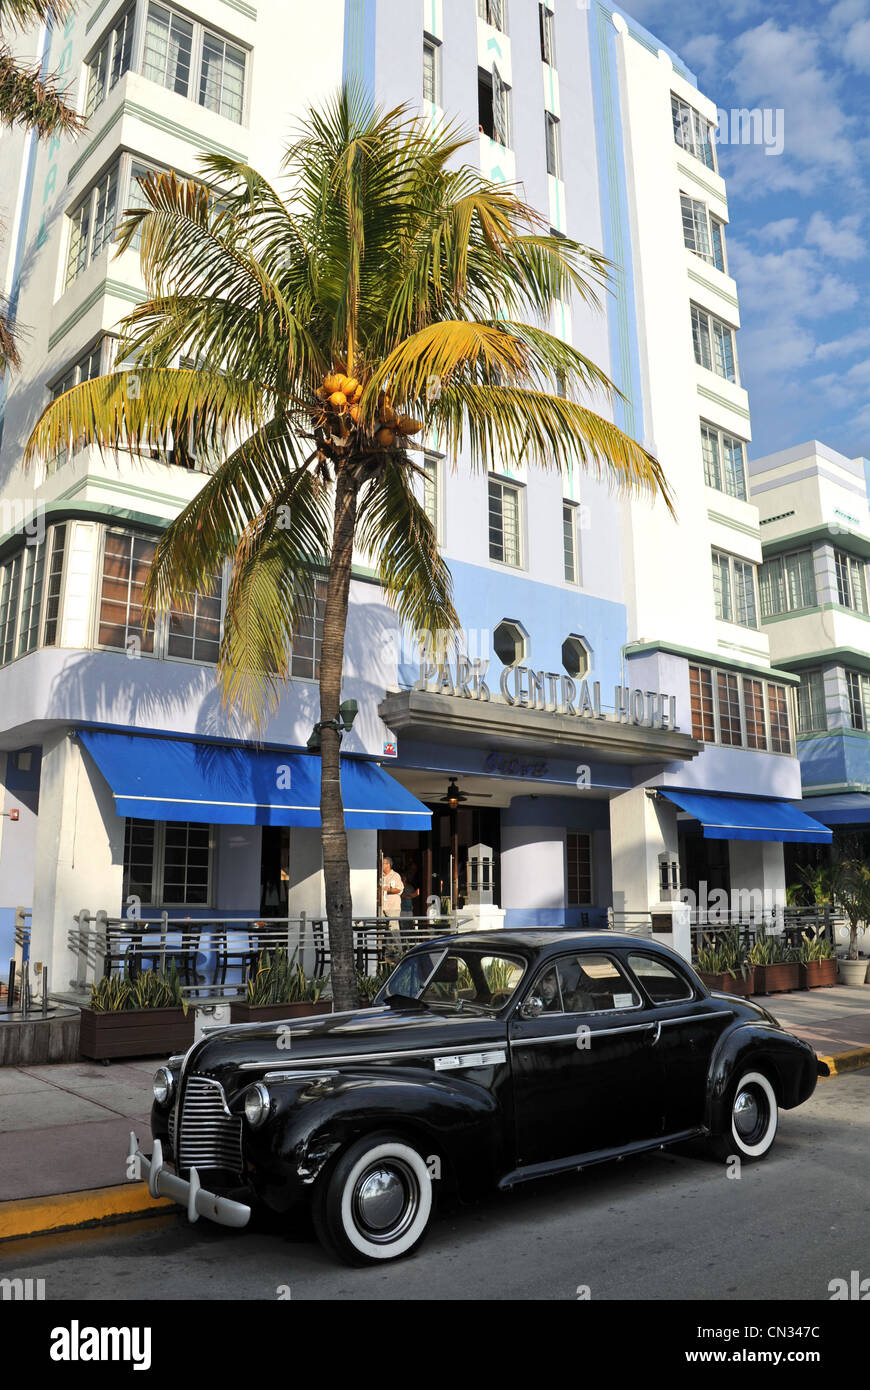 Park Central Hotel, South Beach, Miami, Florida, USA Stockfoto